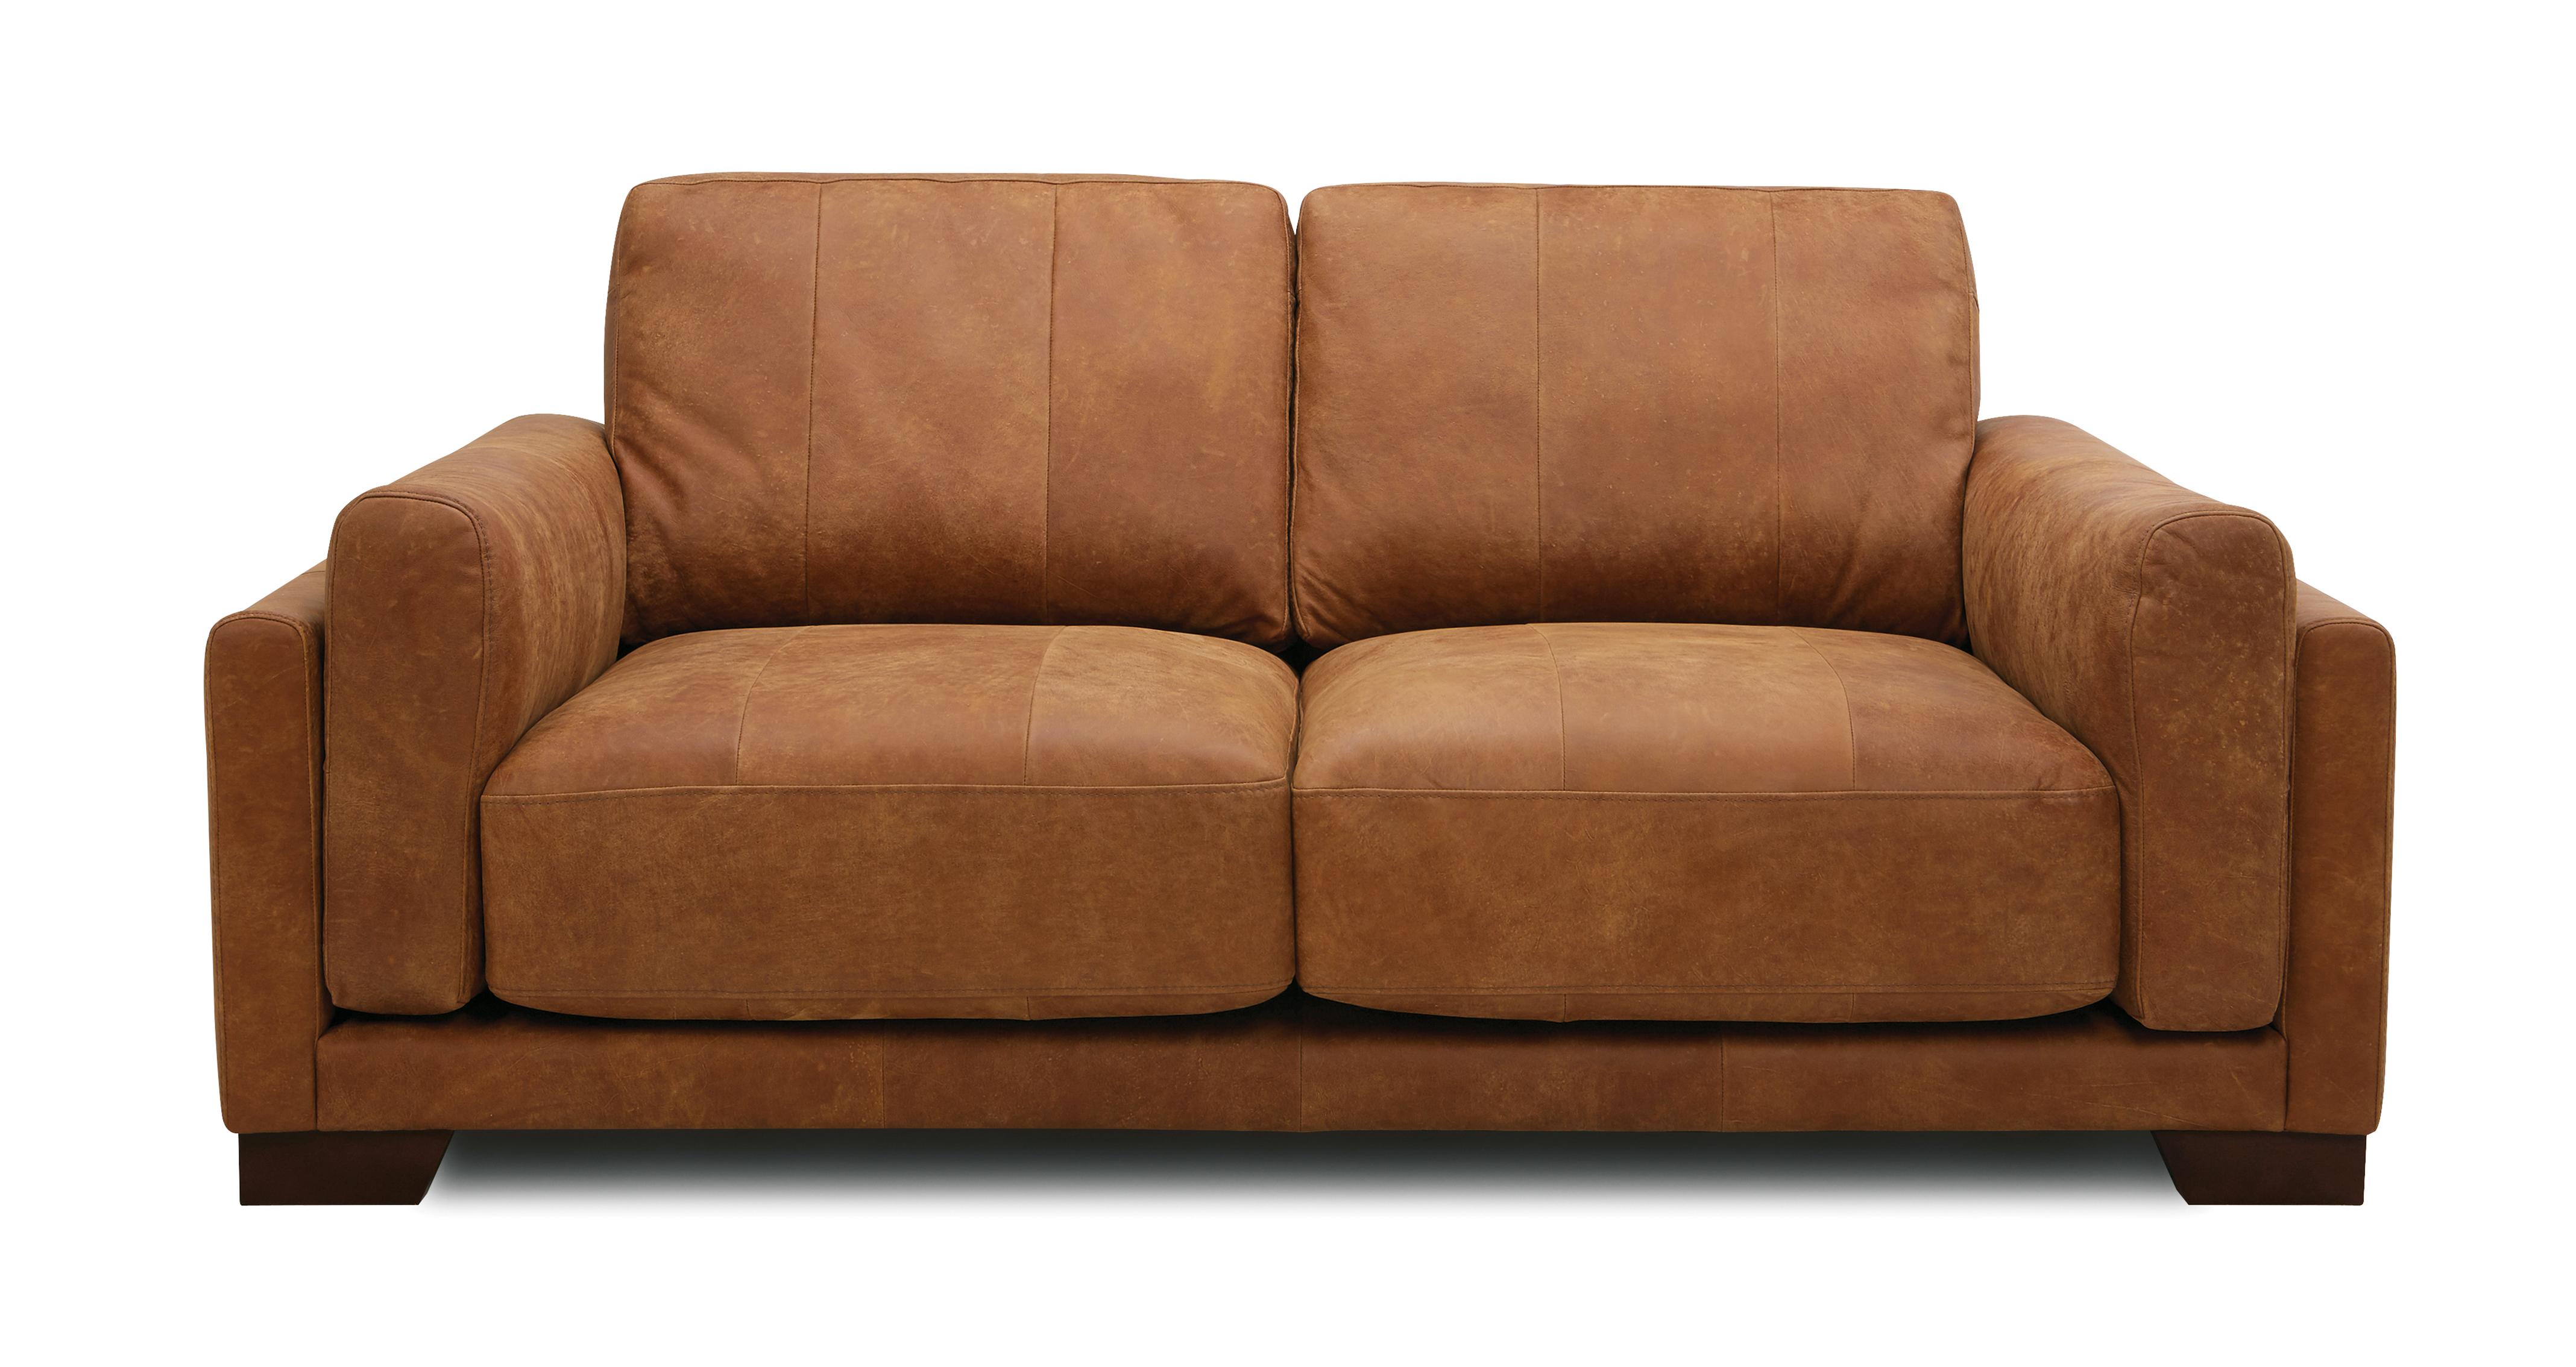 Balboa 2 Seater Sofa | DFS